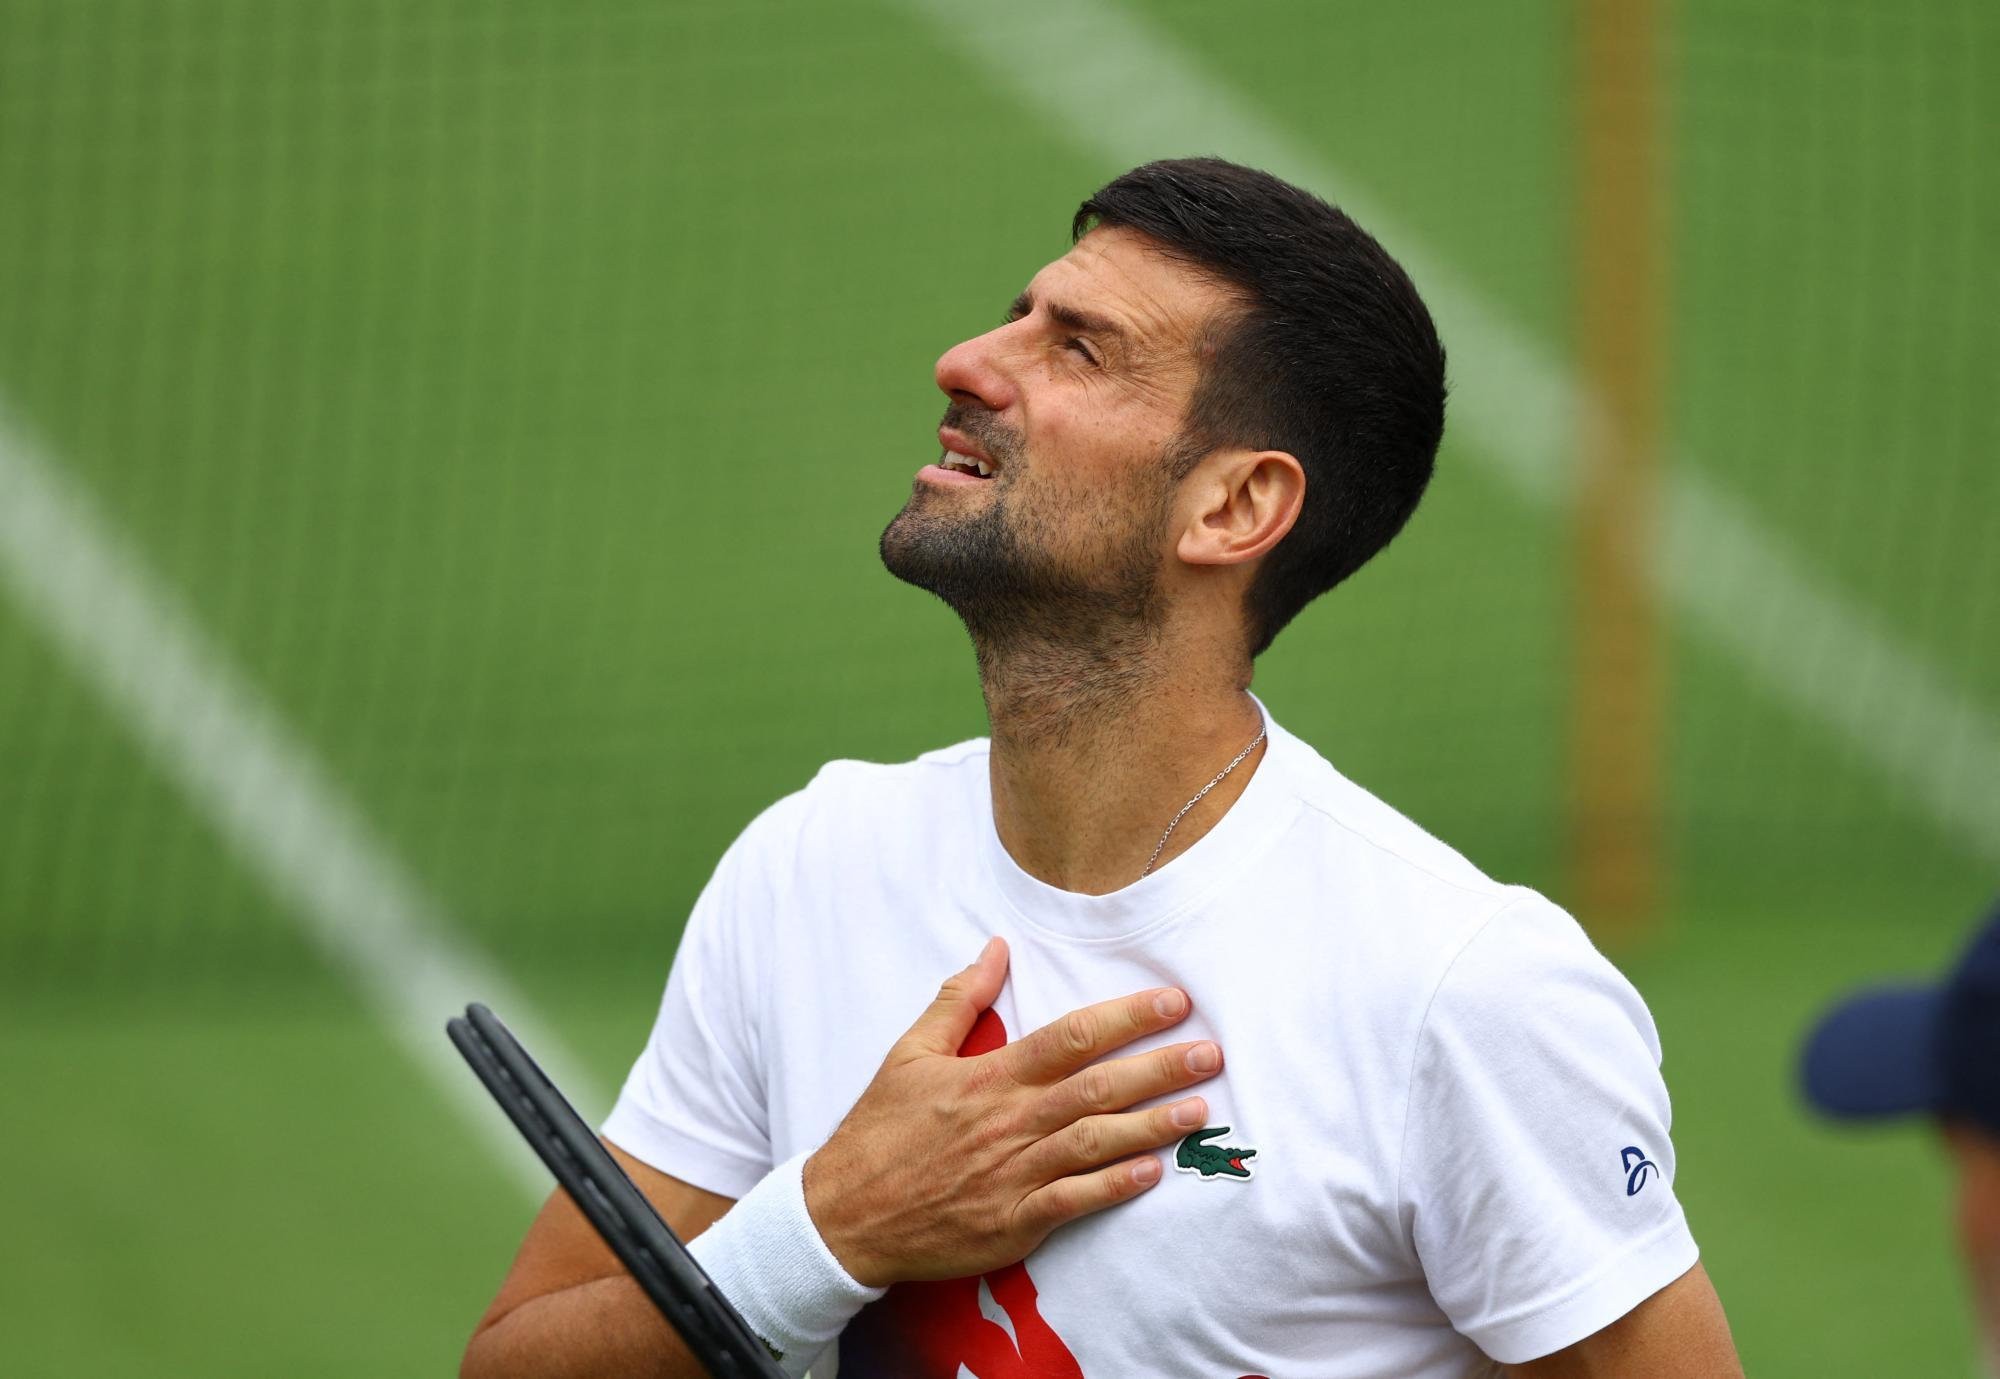 Tennis-Superstar Djokovic zieht kampflos ins Wimbledon-Halbfinale ein